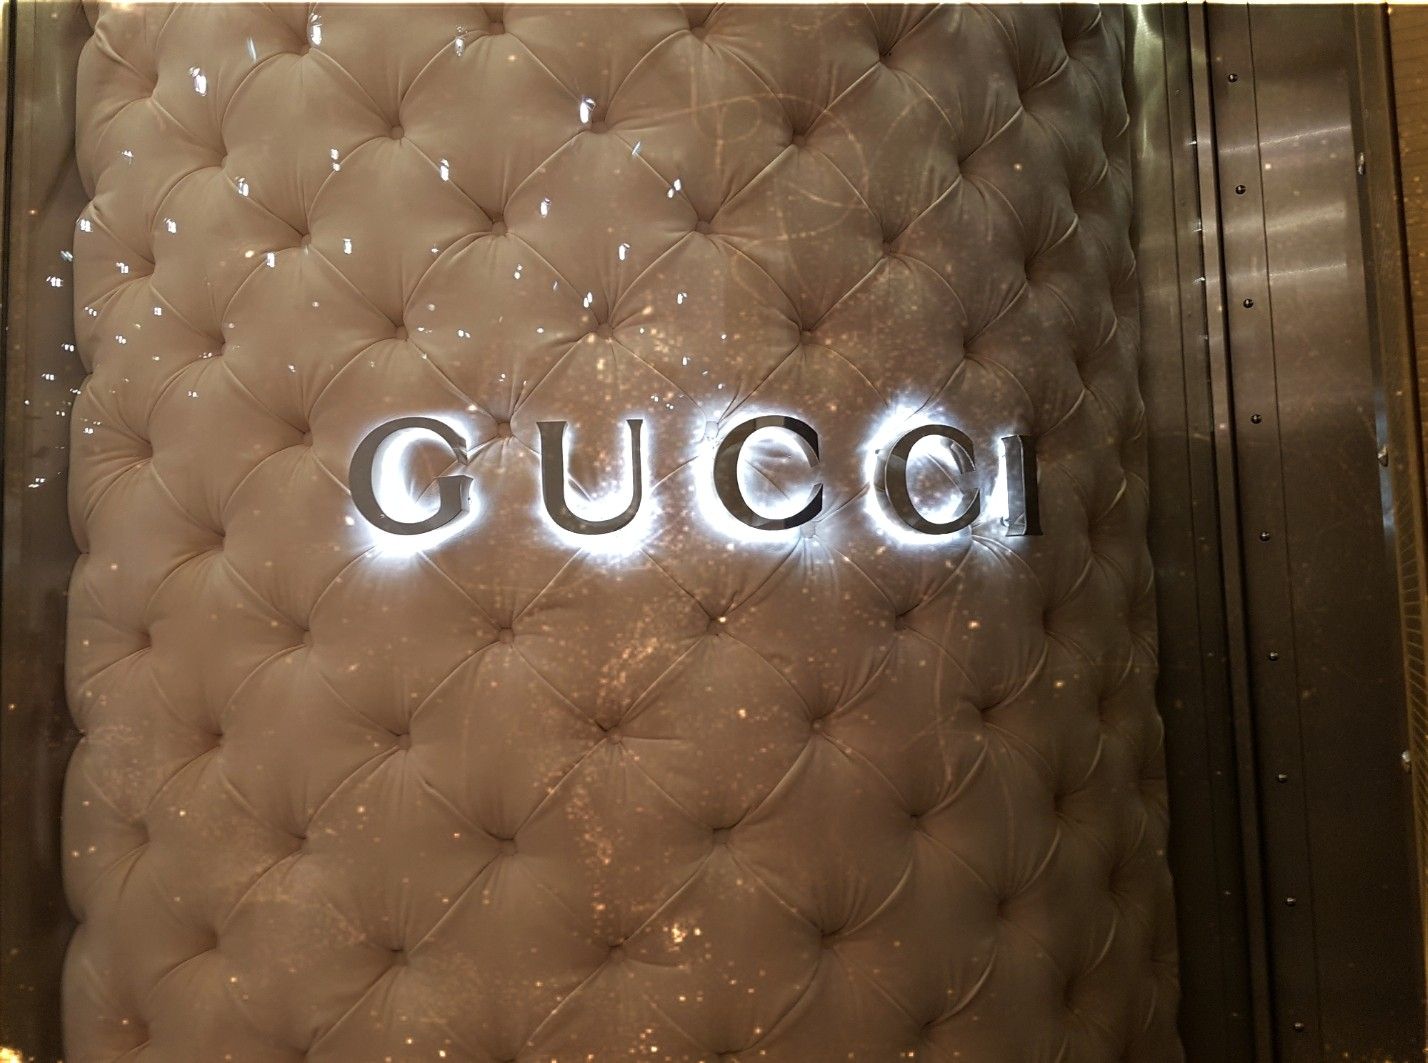 Gucci store in Paris #Gucci #aesthetic #Paris #golden #fashion #italian #garden #hf #lights #badbitch #badirl #tumblr. Gucci store, Gucci tumblr, Gold aesthetic